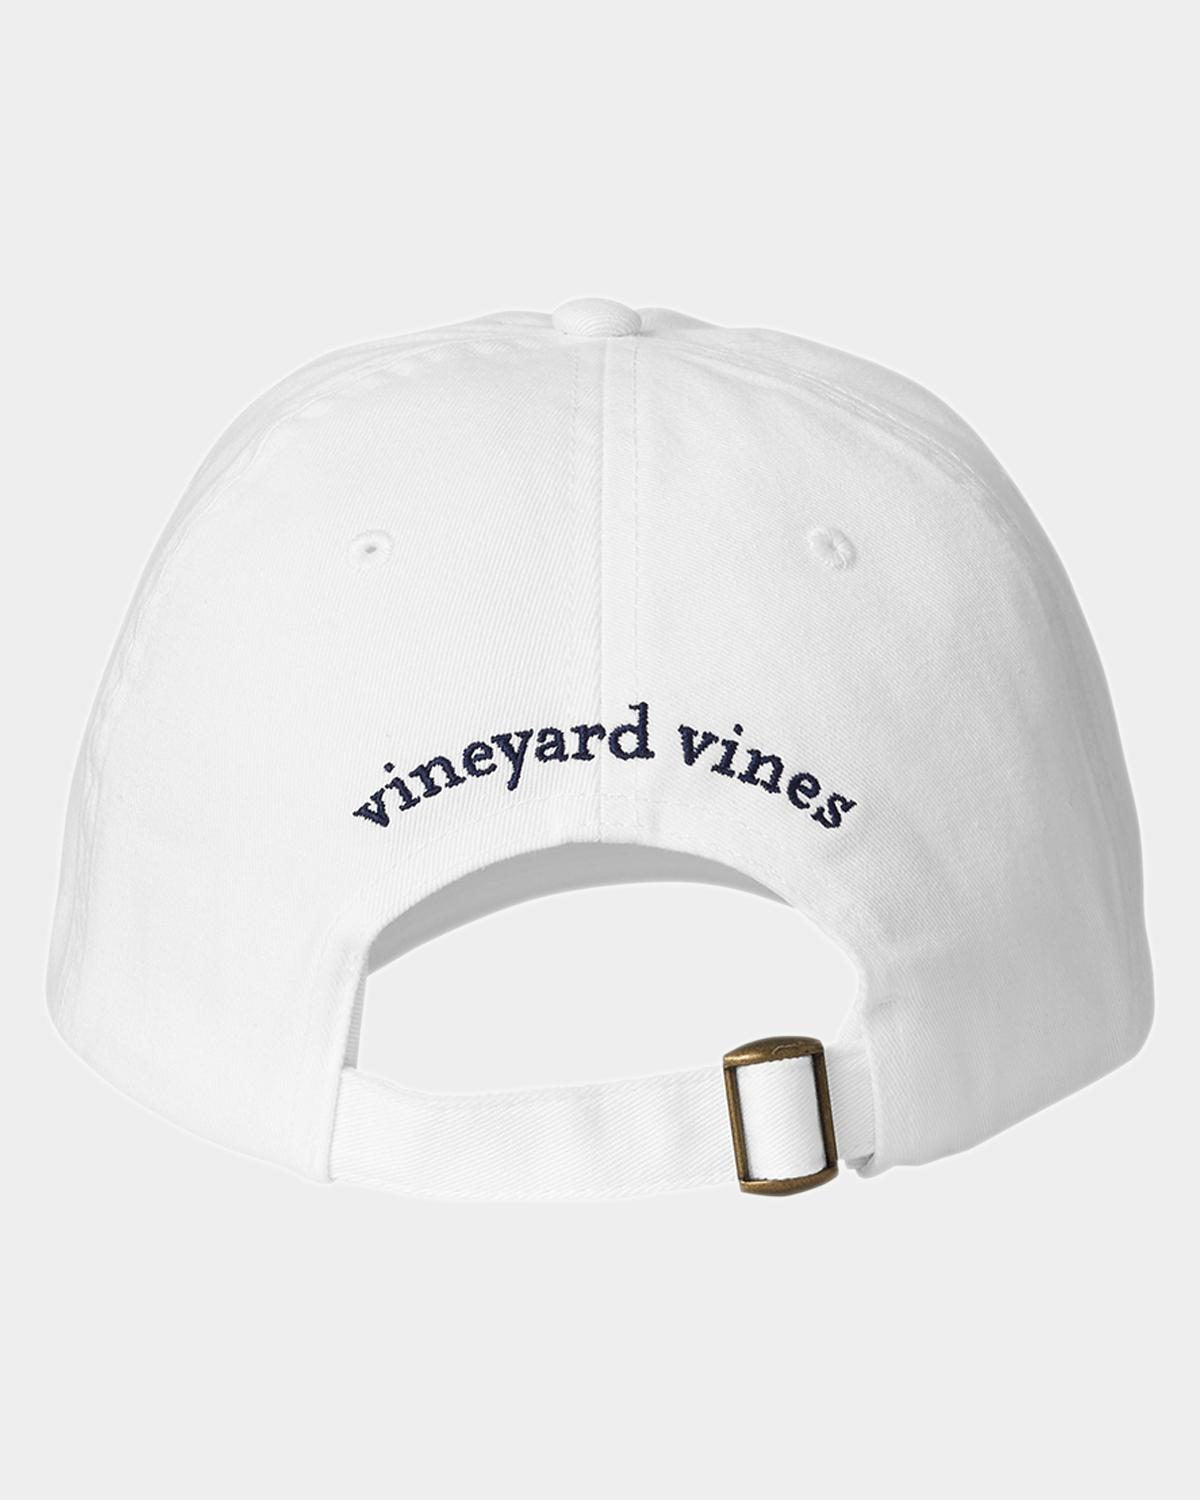 Vineyard Vines Custom Baseball Hat F001780 White Cap